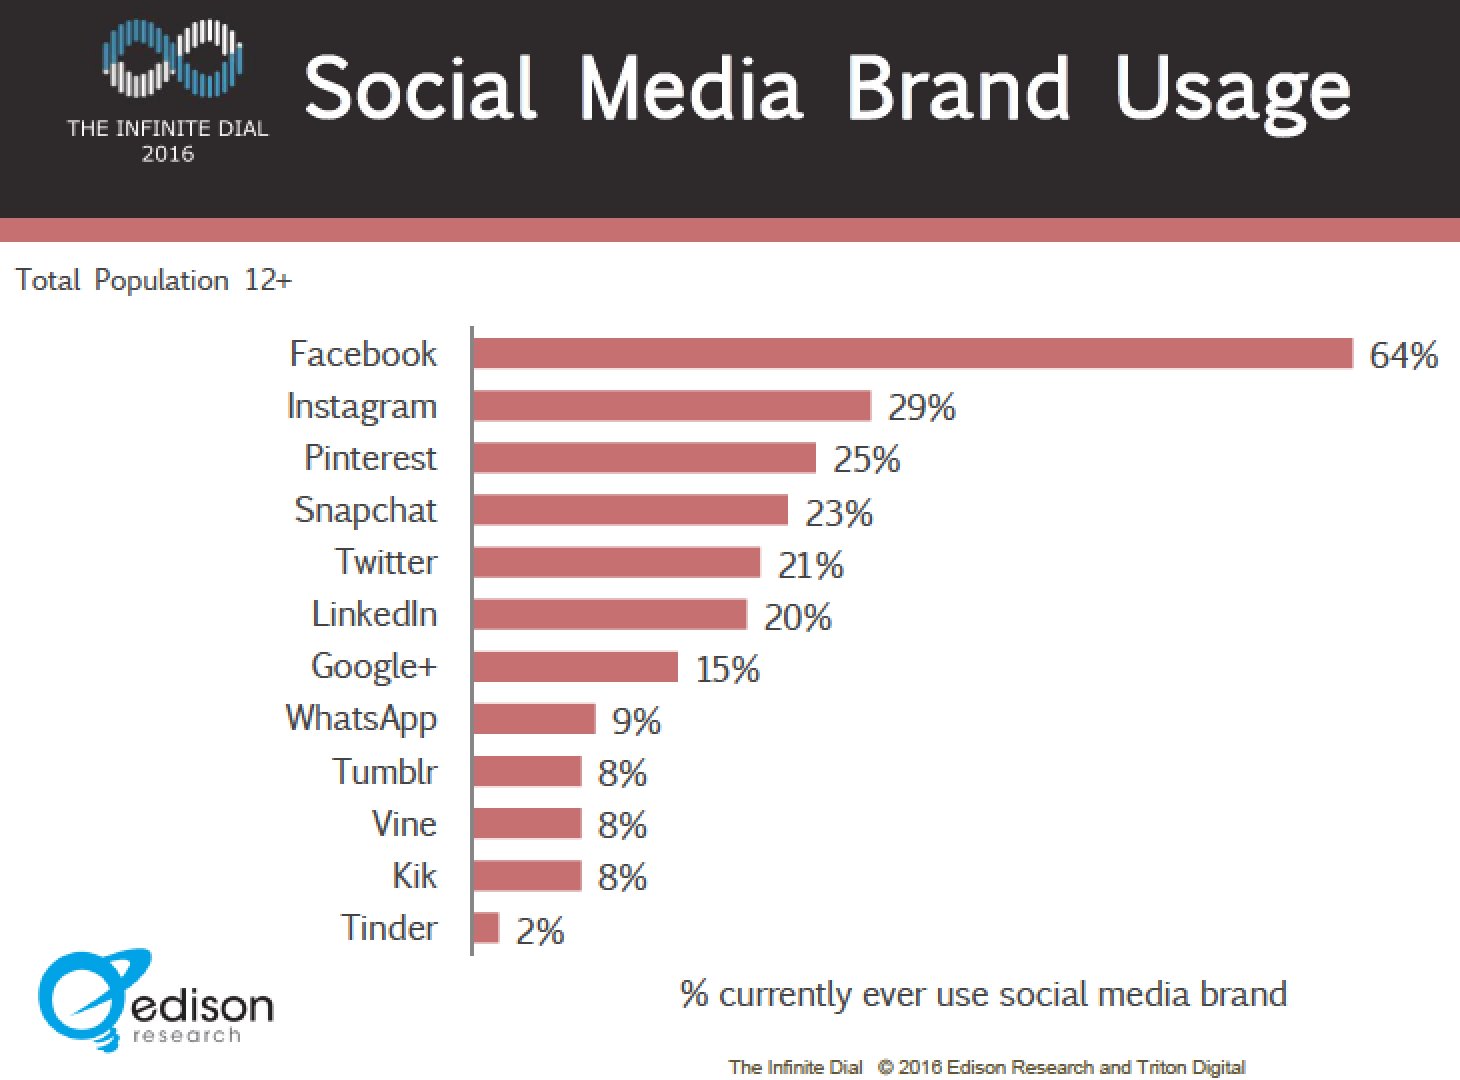 Top social media usage